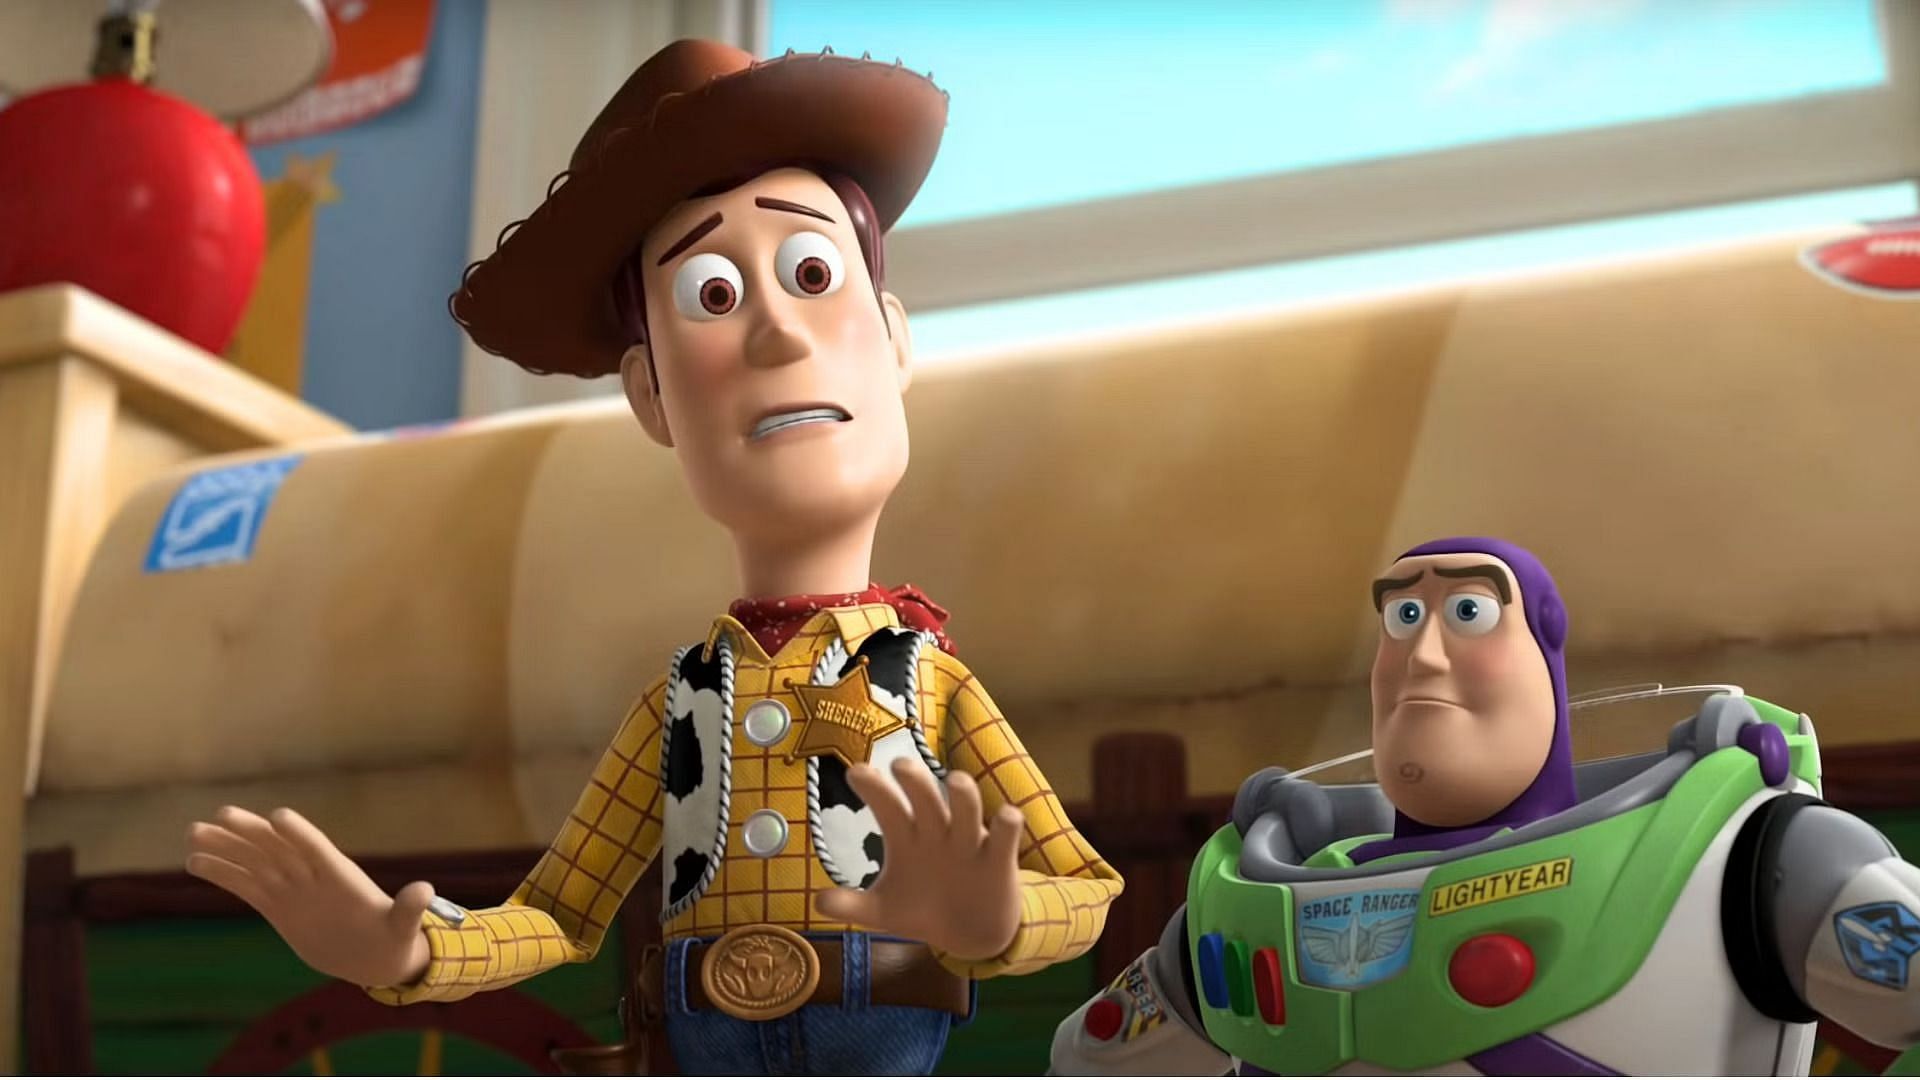 Toy Story was the first CGI animated film (Image via Pixar Animation Studios)